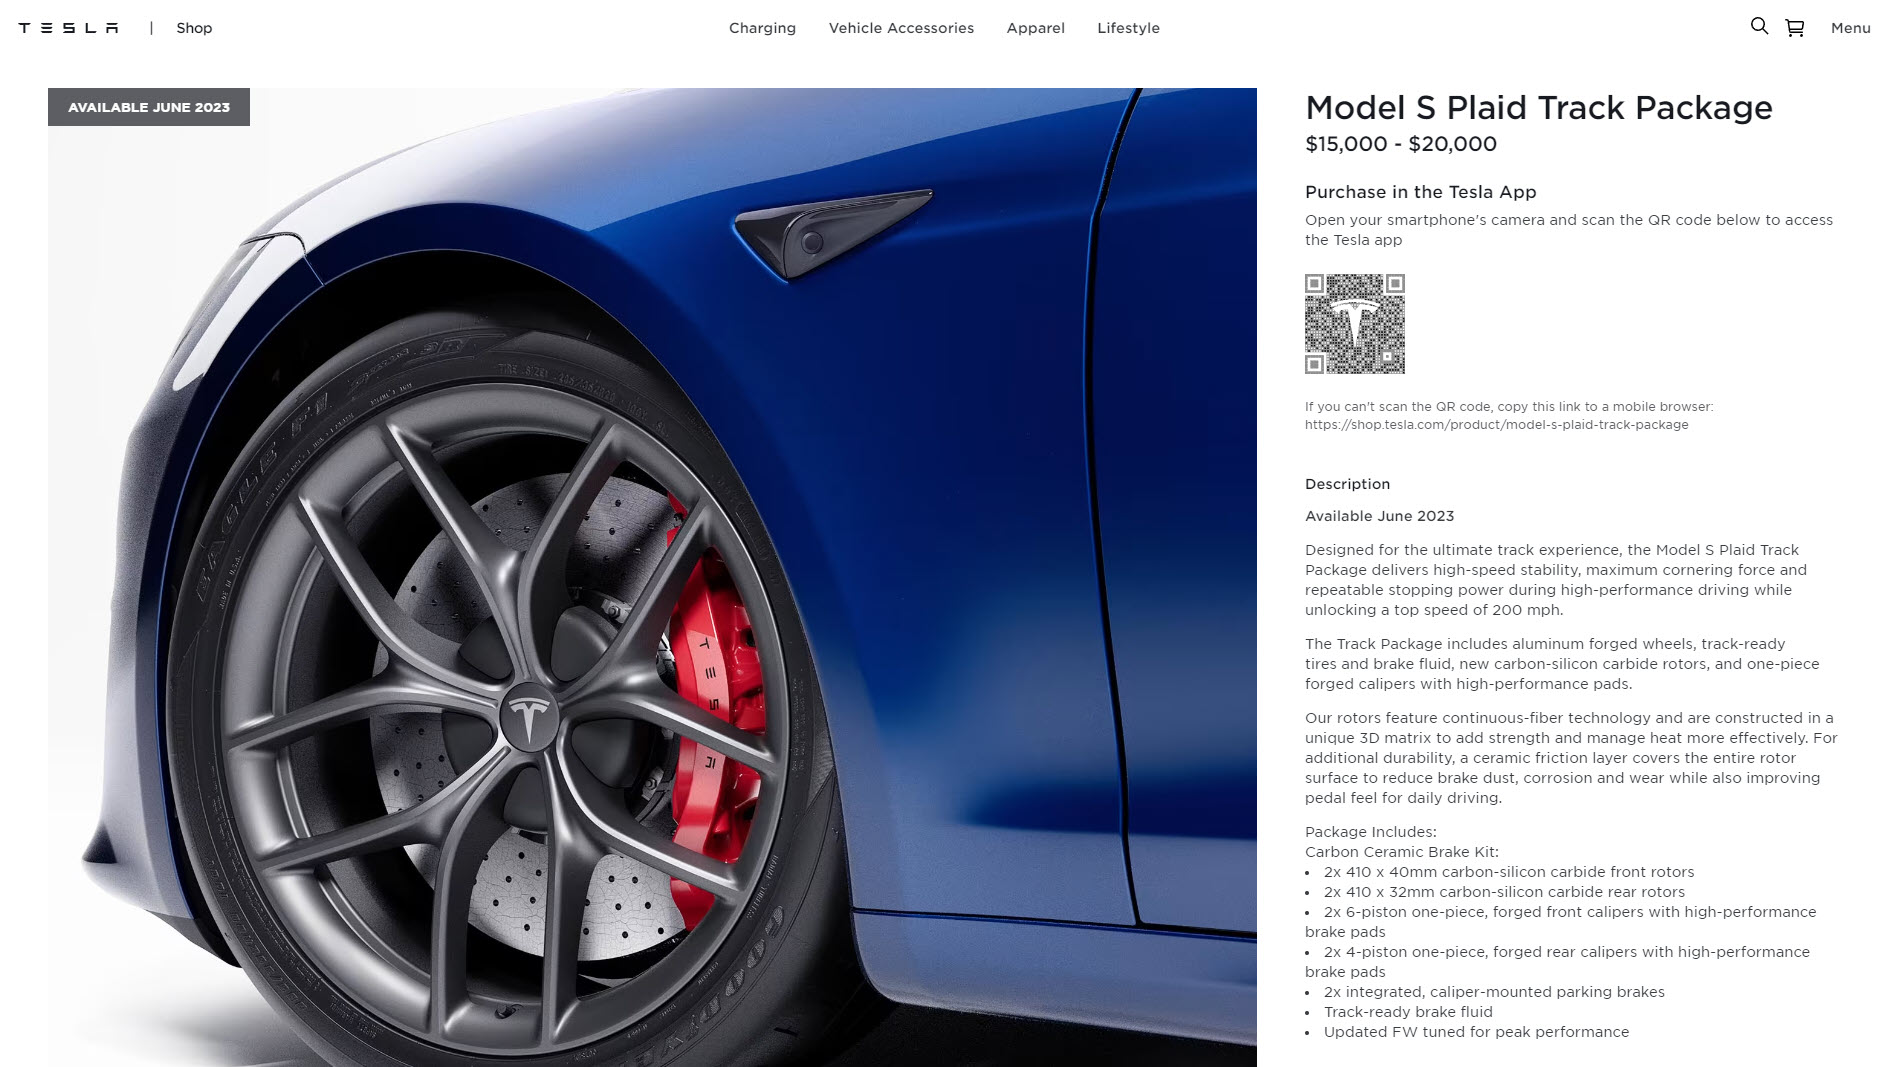 Engineering Analysis Of New Tesla Model S Plaid Supercar